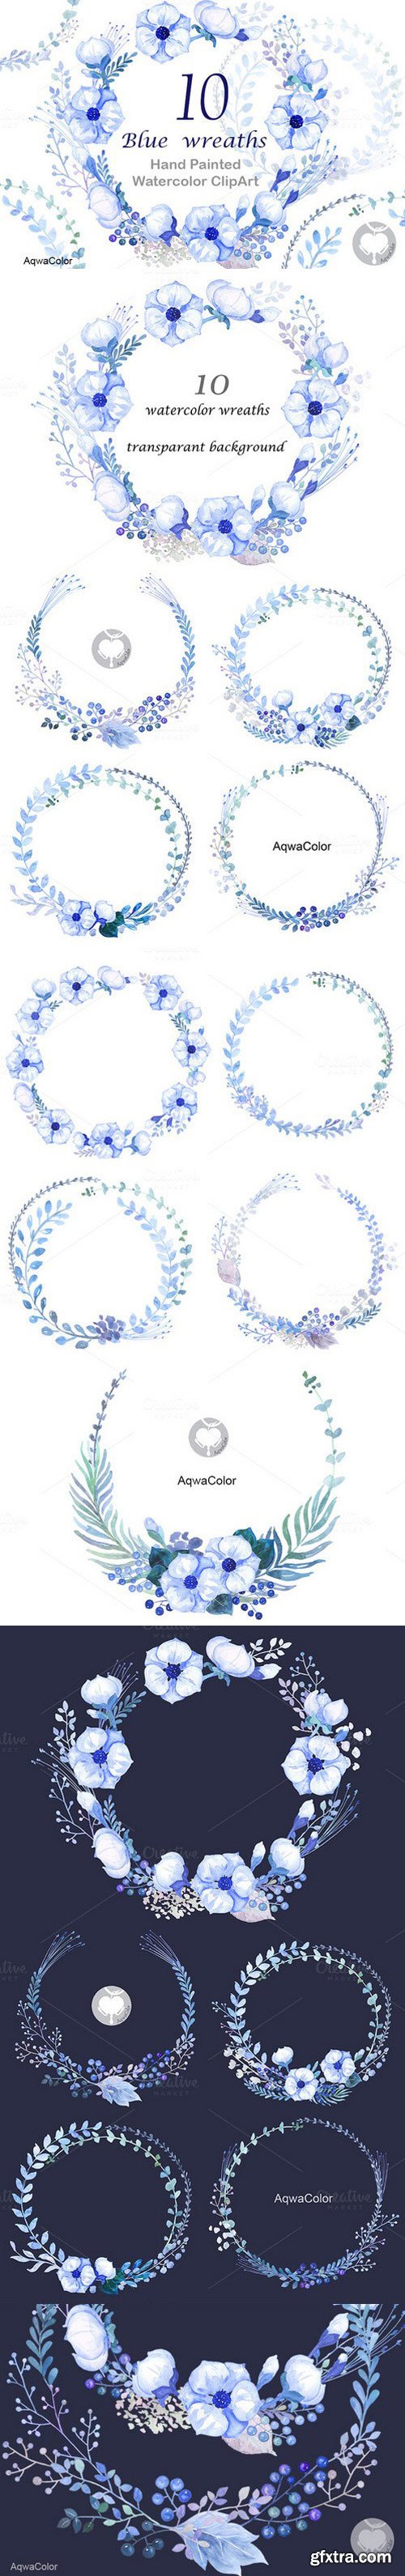 CM - Watercolour clipart Blue Wreaths 718552